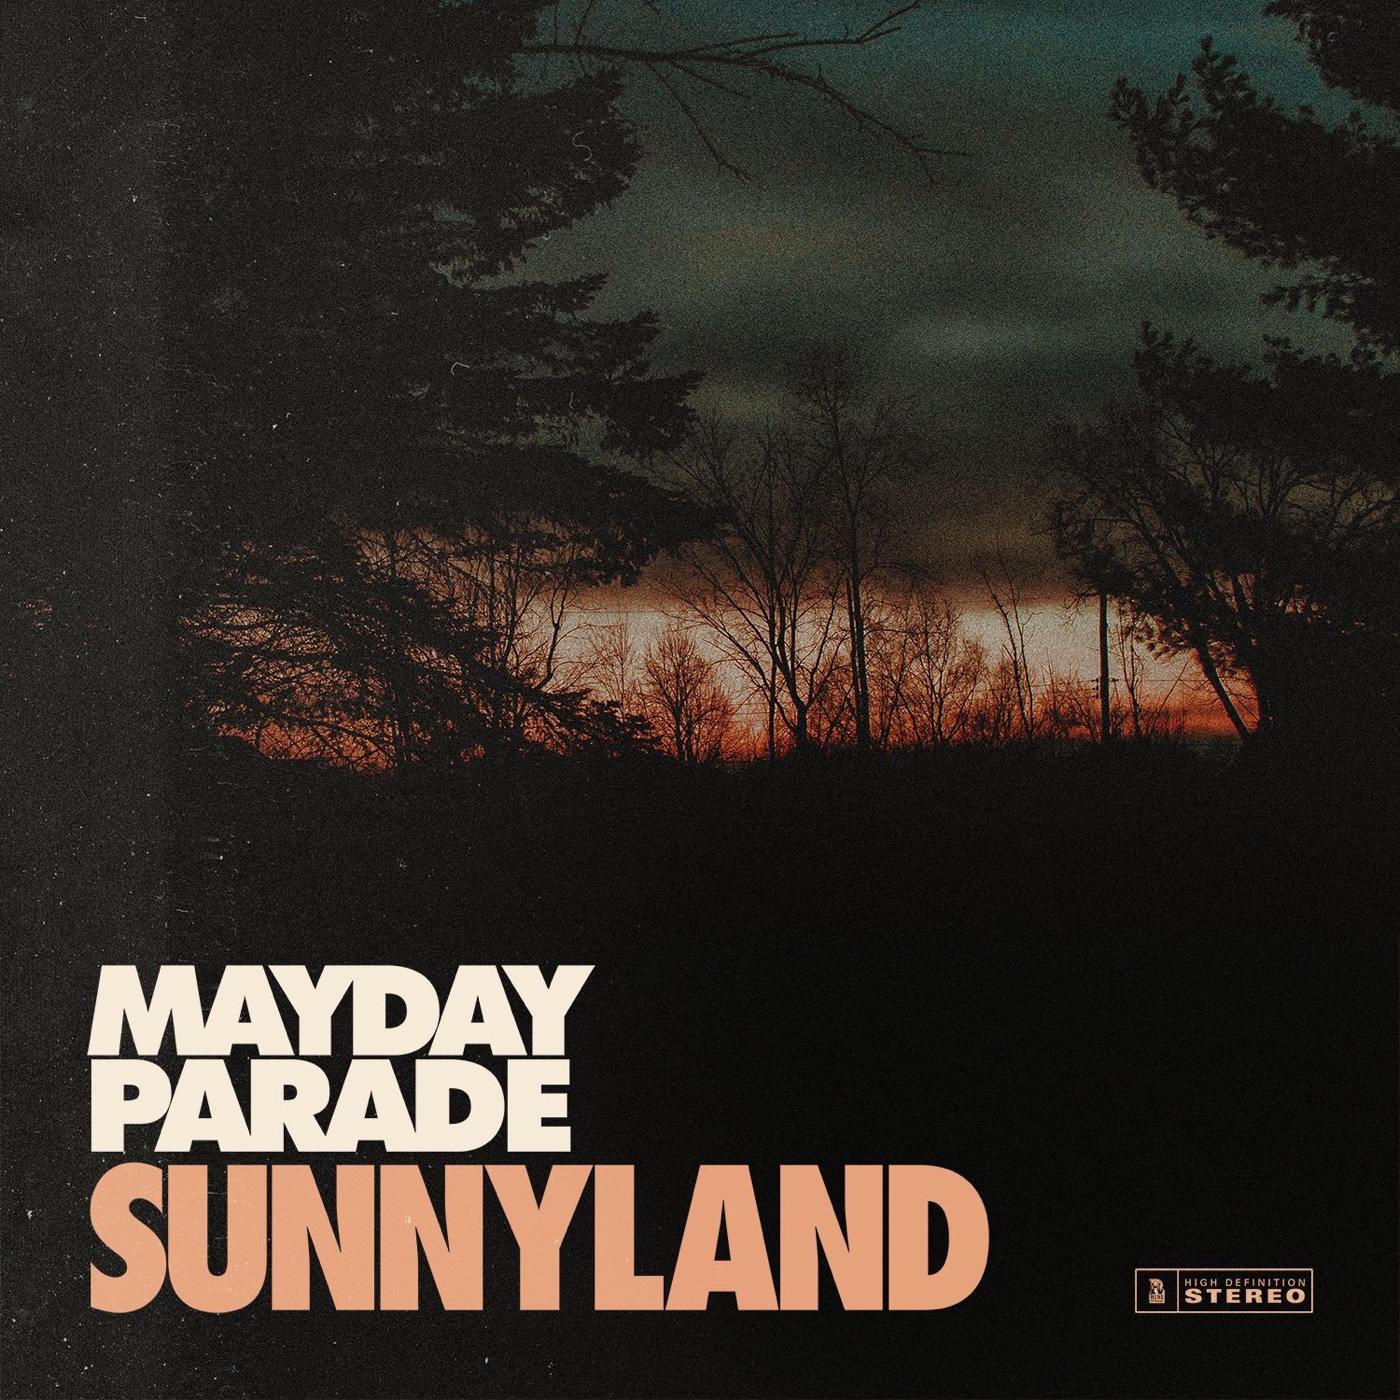 Mayday Parade - Stay the Same [single] (2018)